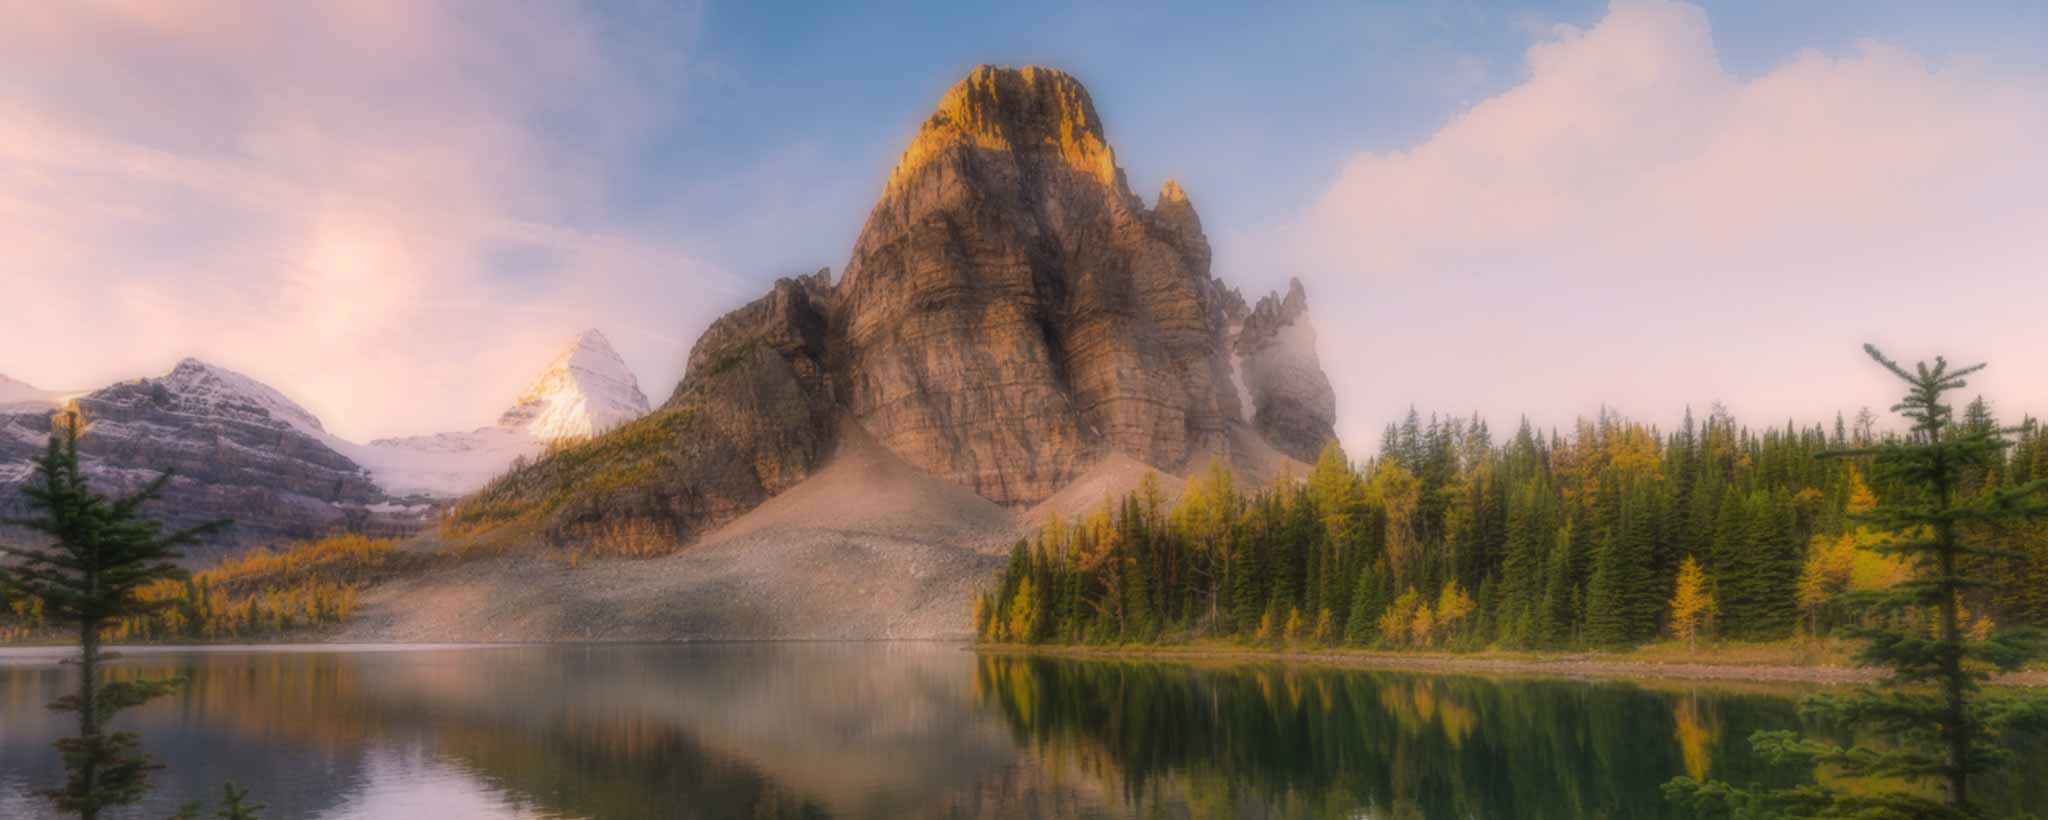 'National park mountain lake'